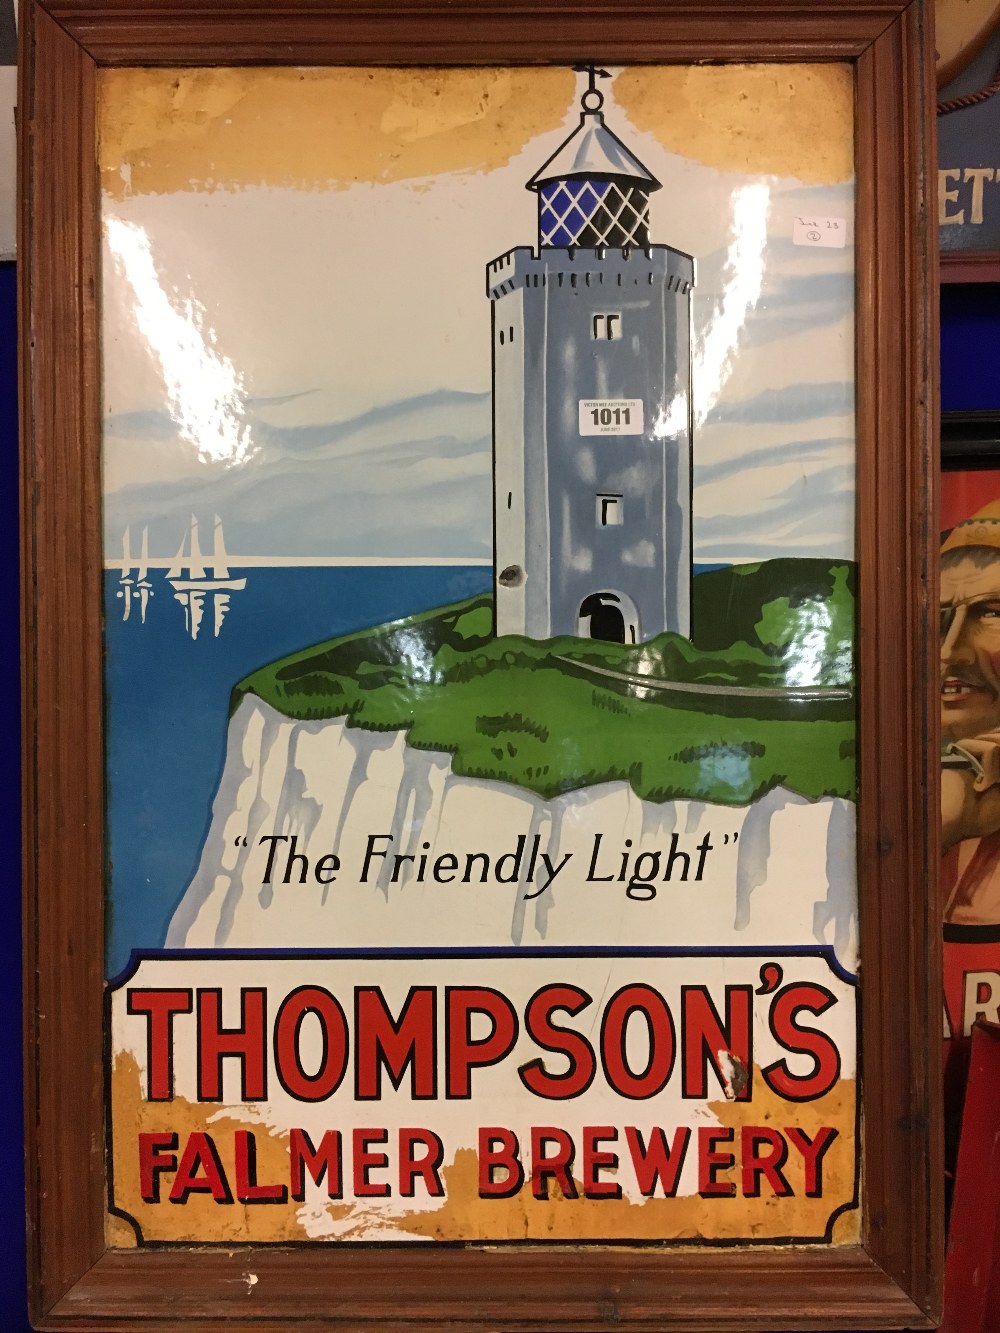 Rare THOMPSON'S FALMER BREWERY The Friendly Light framed enamel sign.